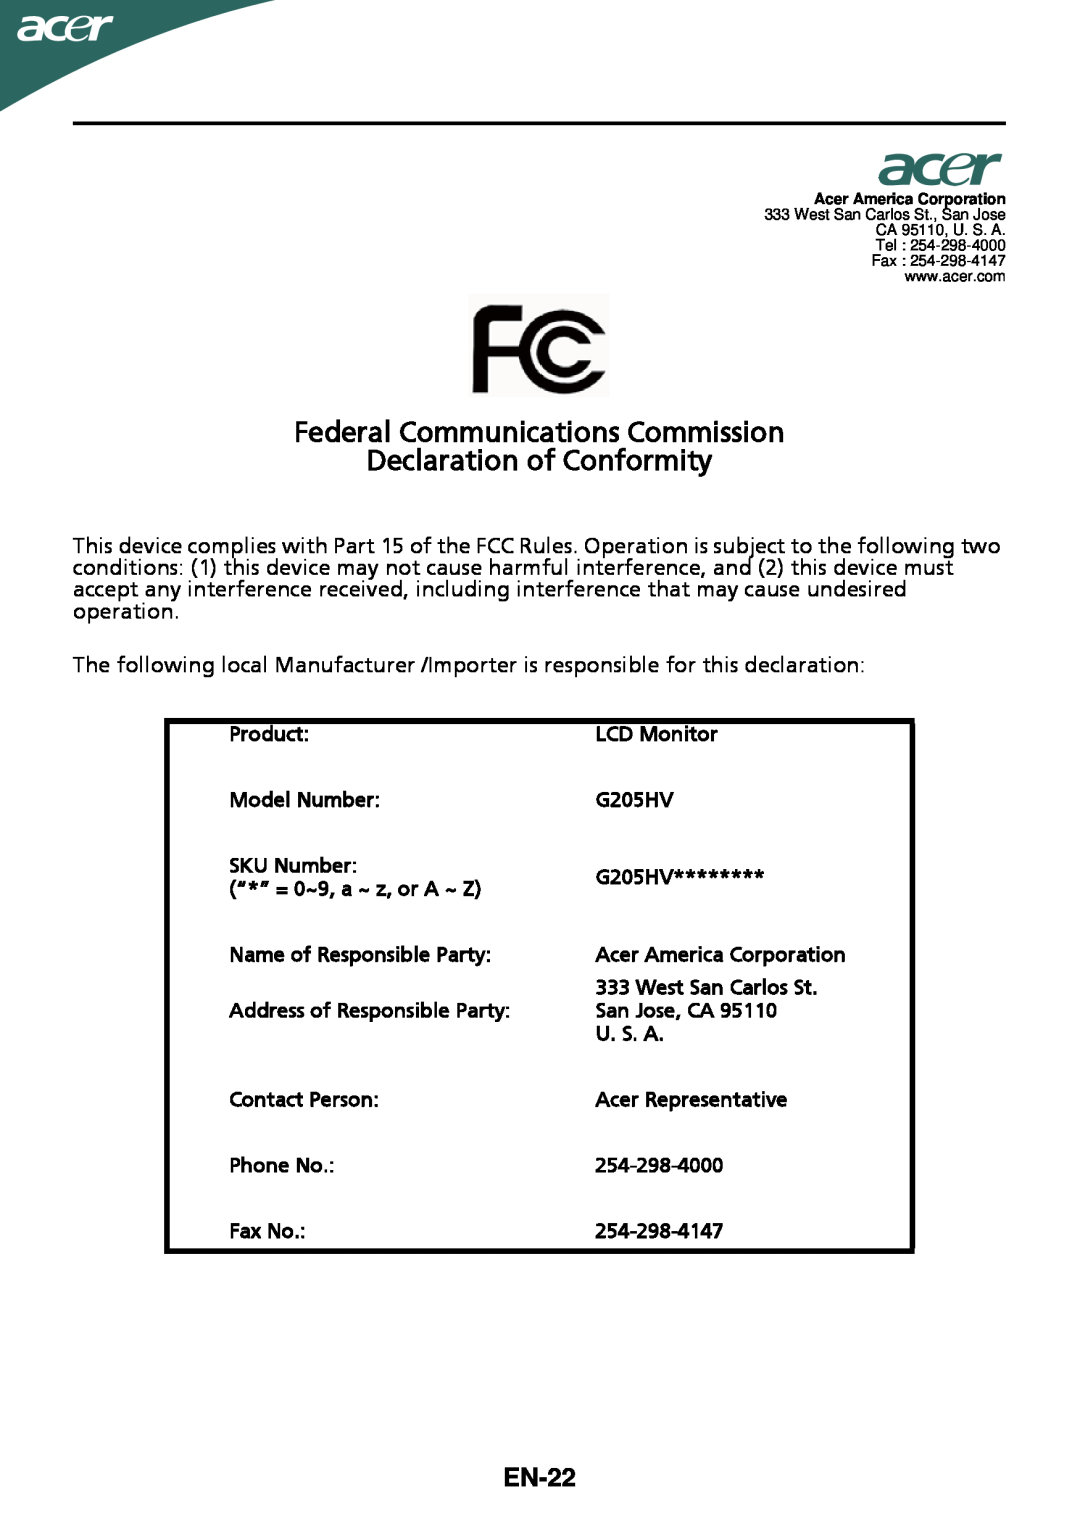 Acer G205HV manual Federal Communications Commission Declaration of Conformity, EN-22 